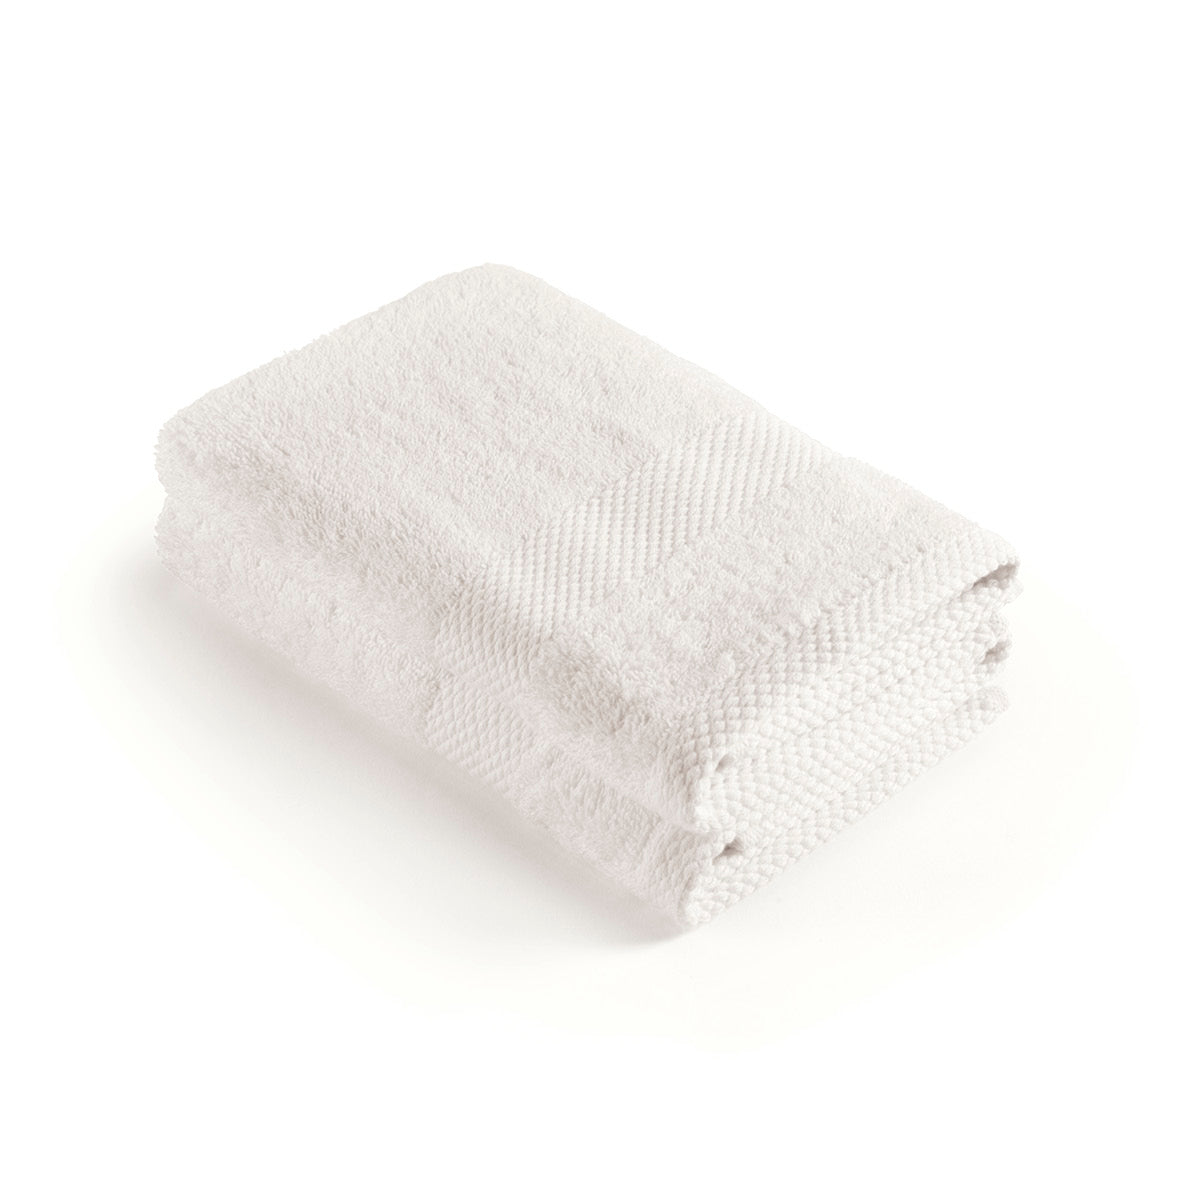 Set of 2 kitchen towels - 45 x 45 cm